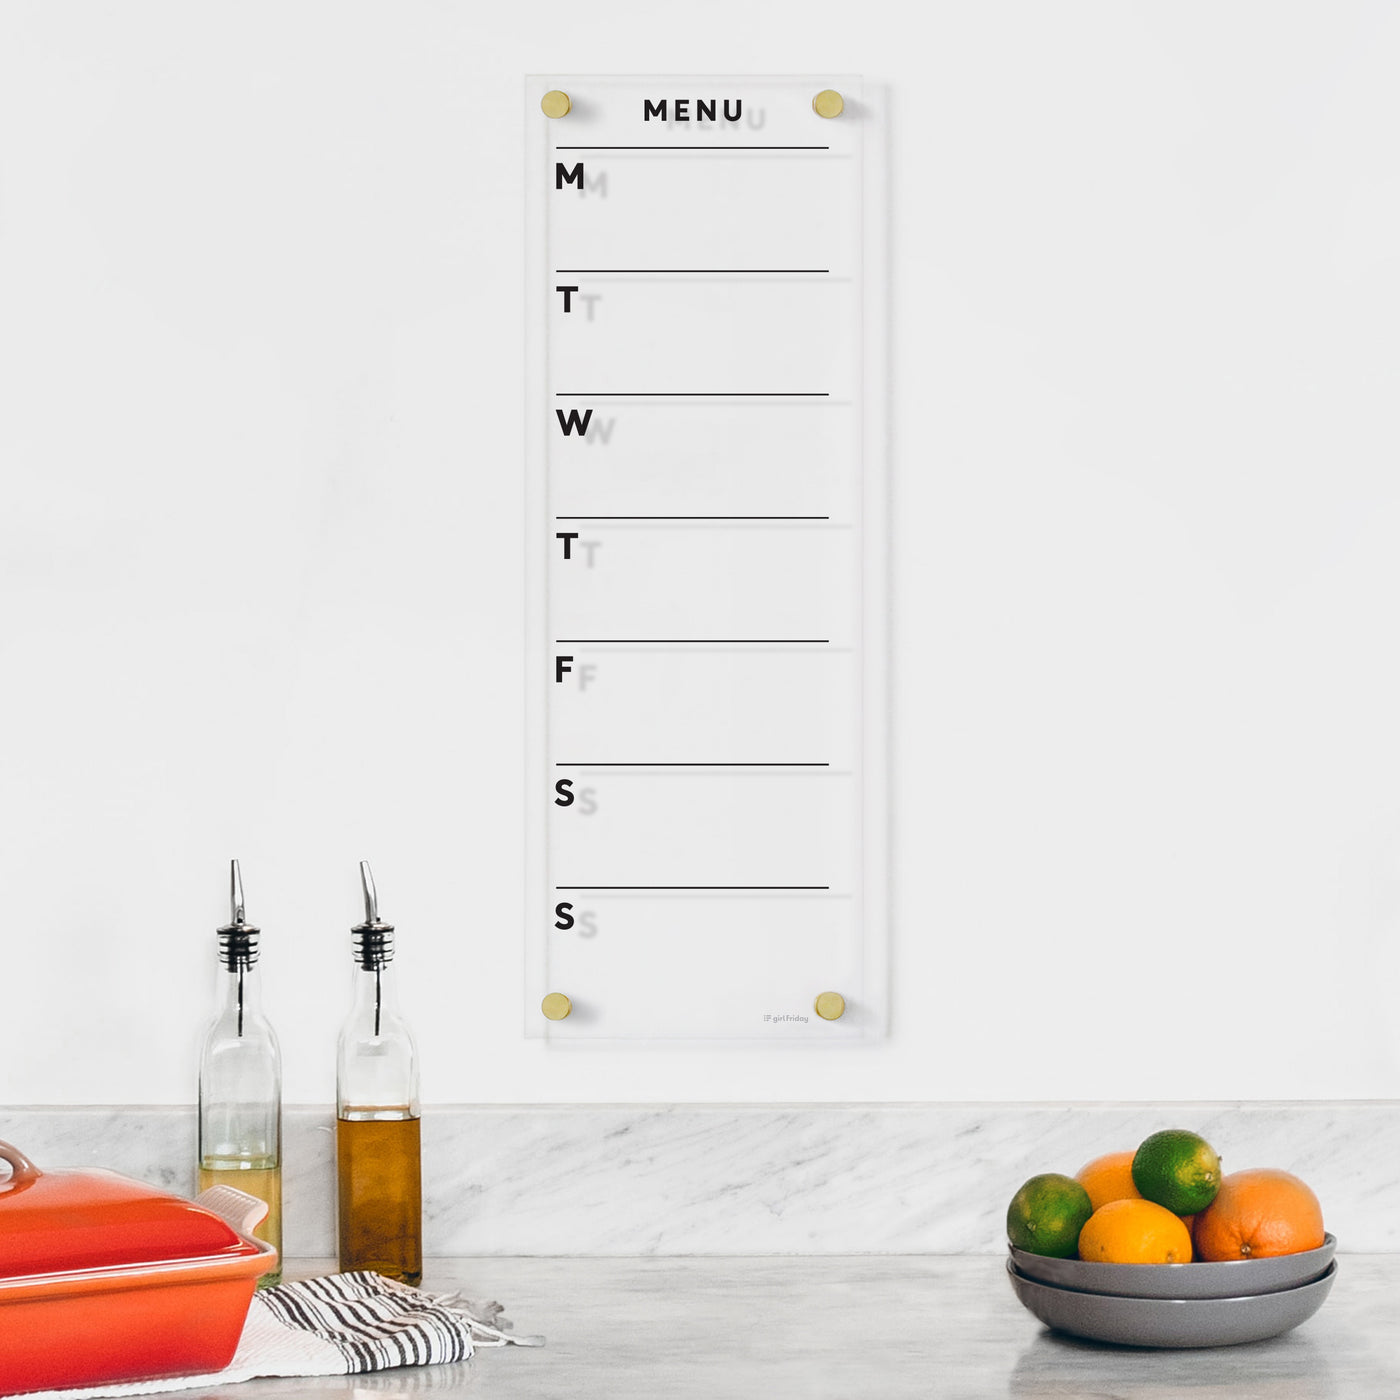 Vertical Weekly Acrylic Menu Board For Wall | Clear Dry Erase Board | Minimalist Wall Mounted Menu Board